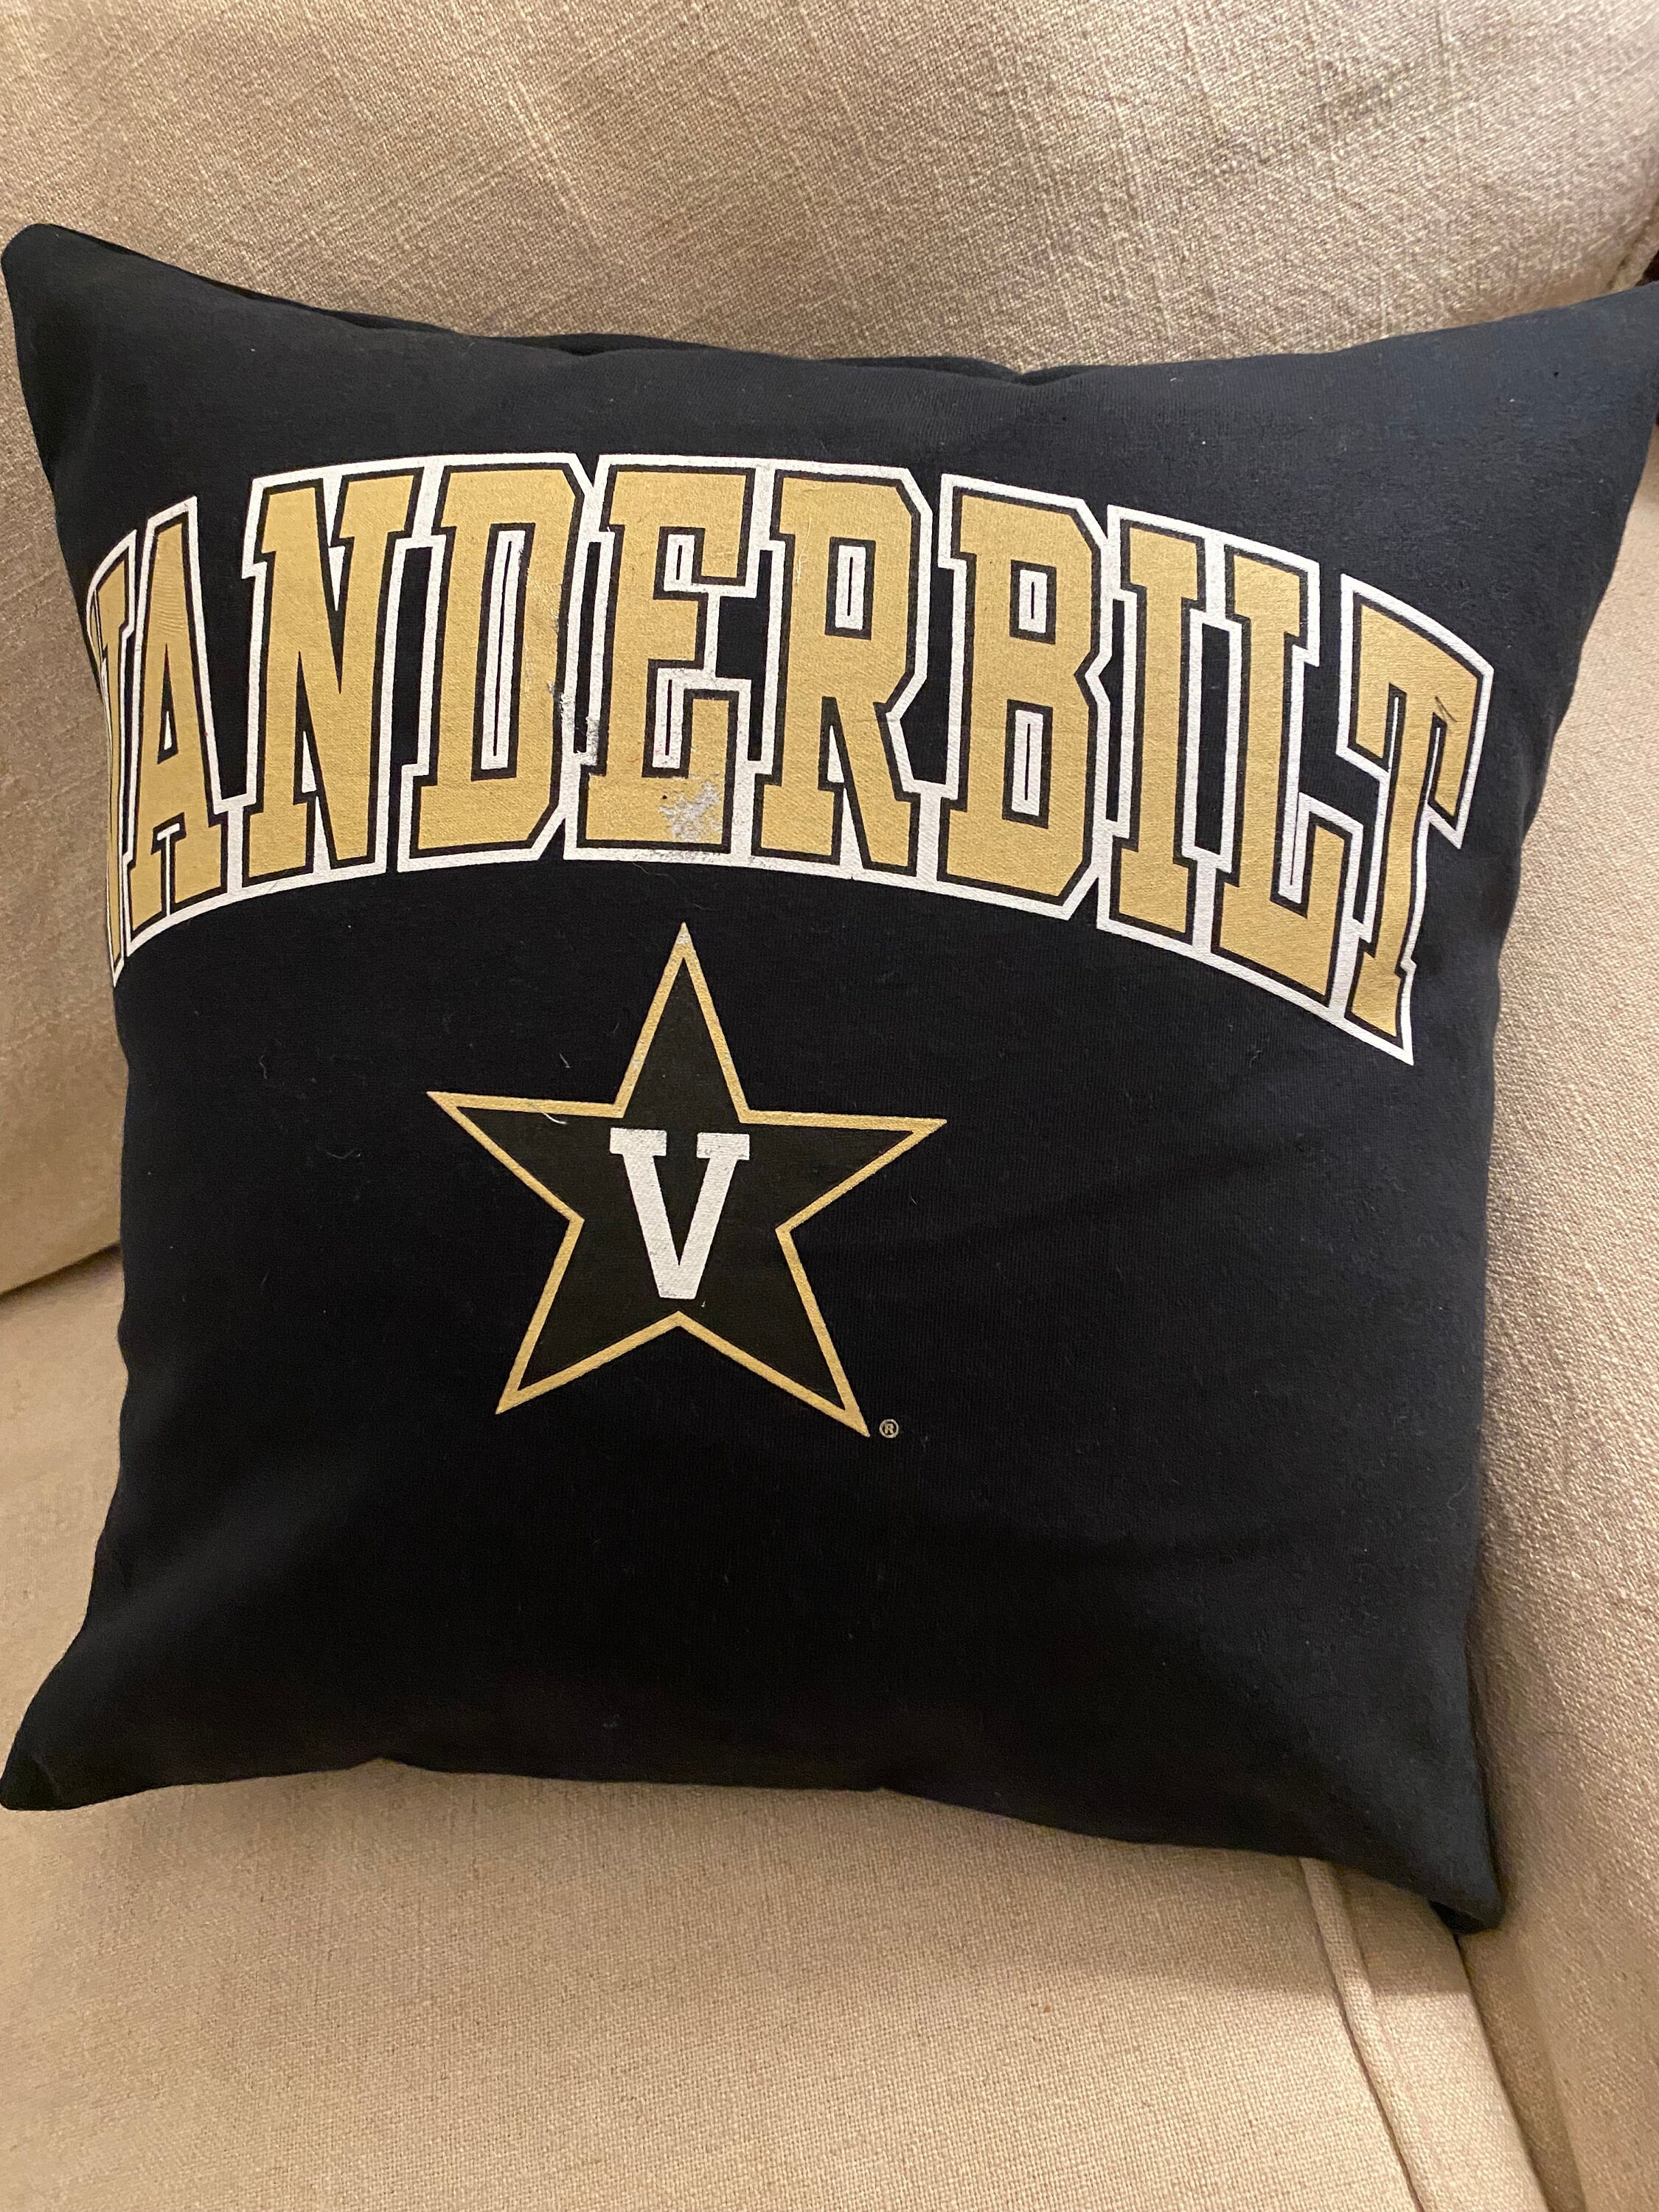 Vanderbilt University Cotton Pillow Case-vanderbilt Commodores 